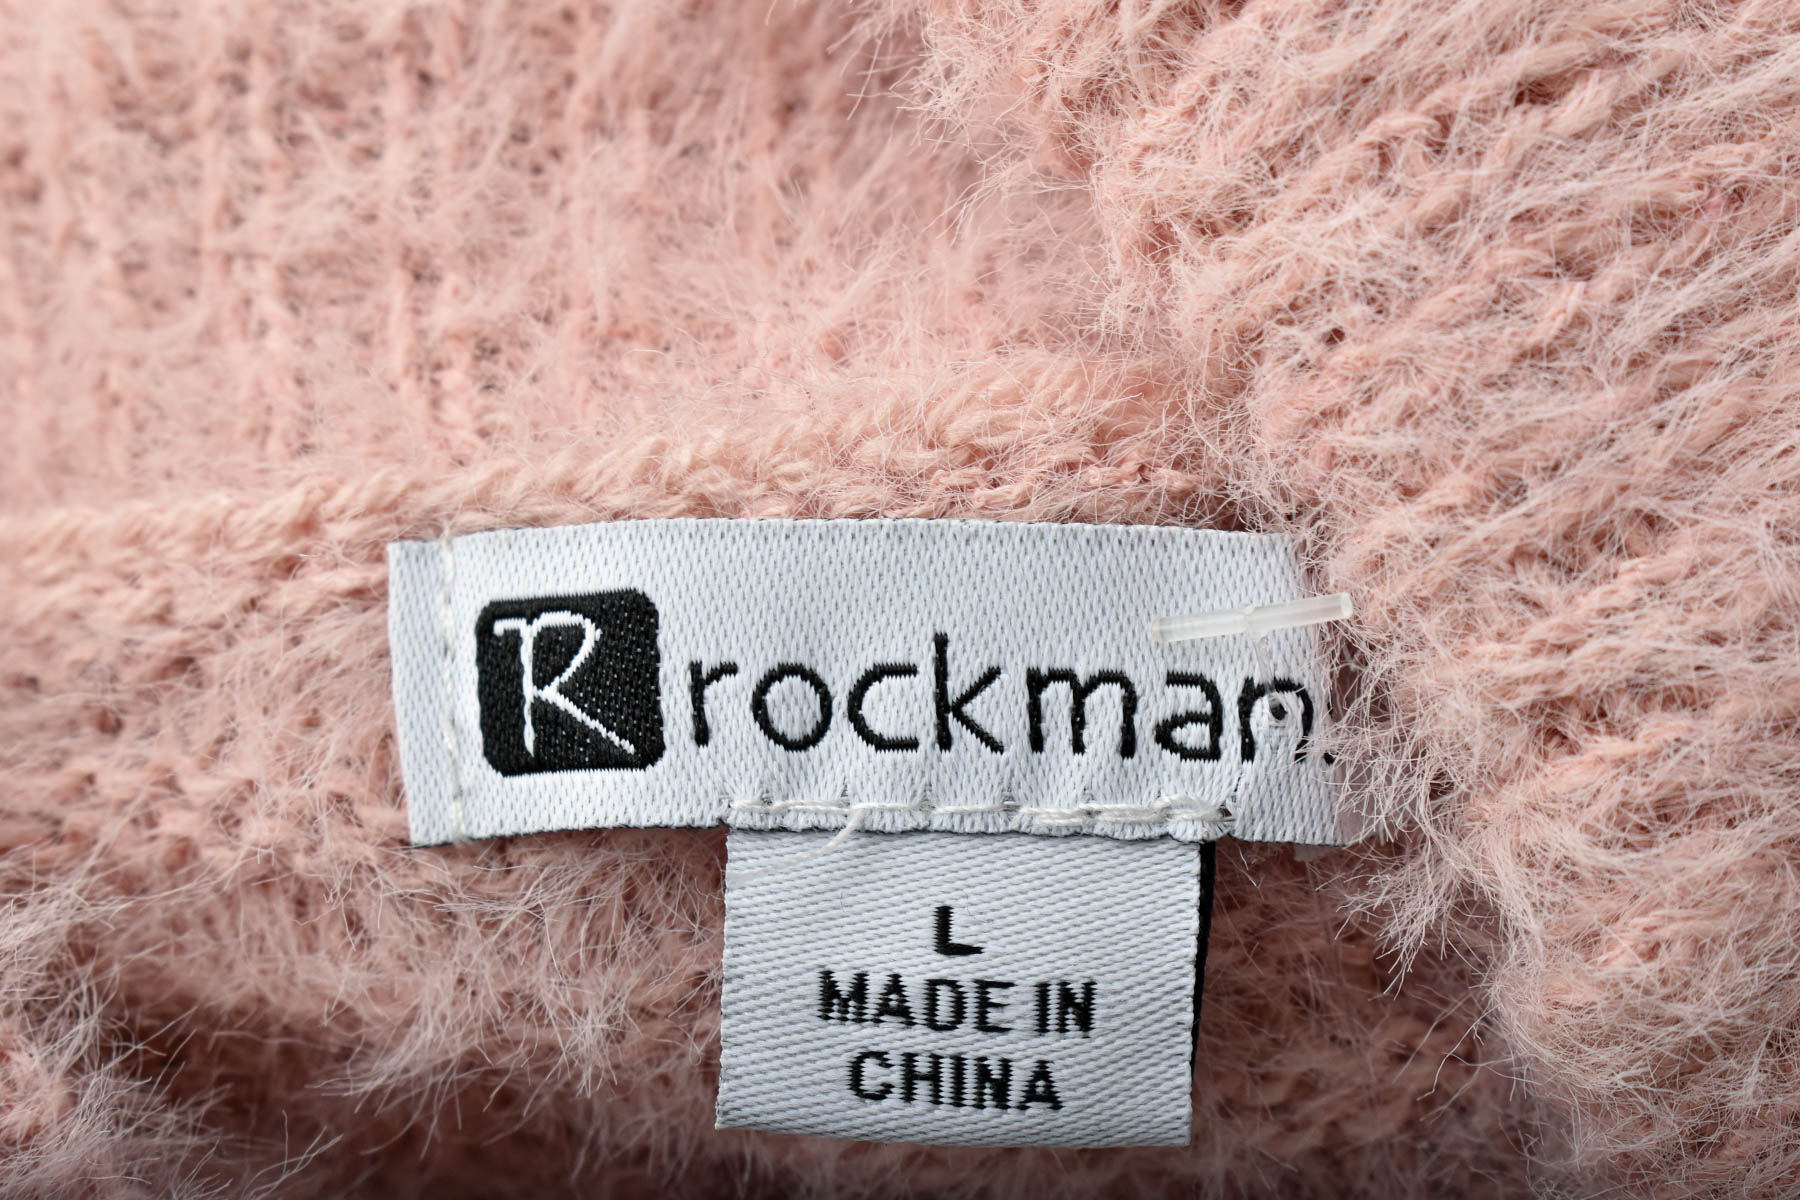 Дамски пуловер - Rockmans - 2